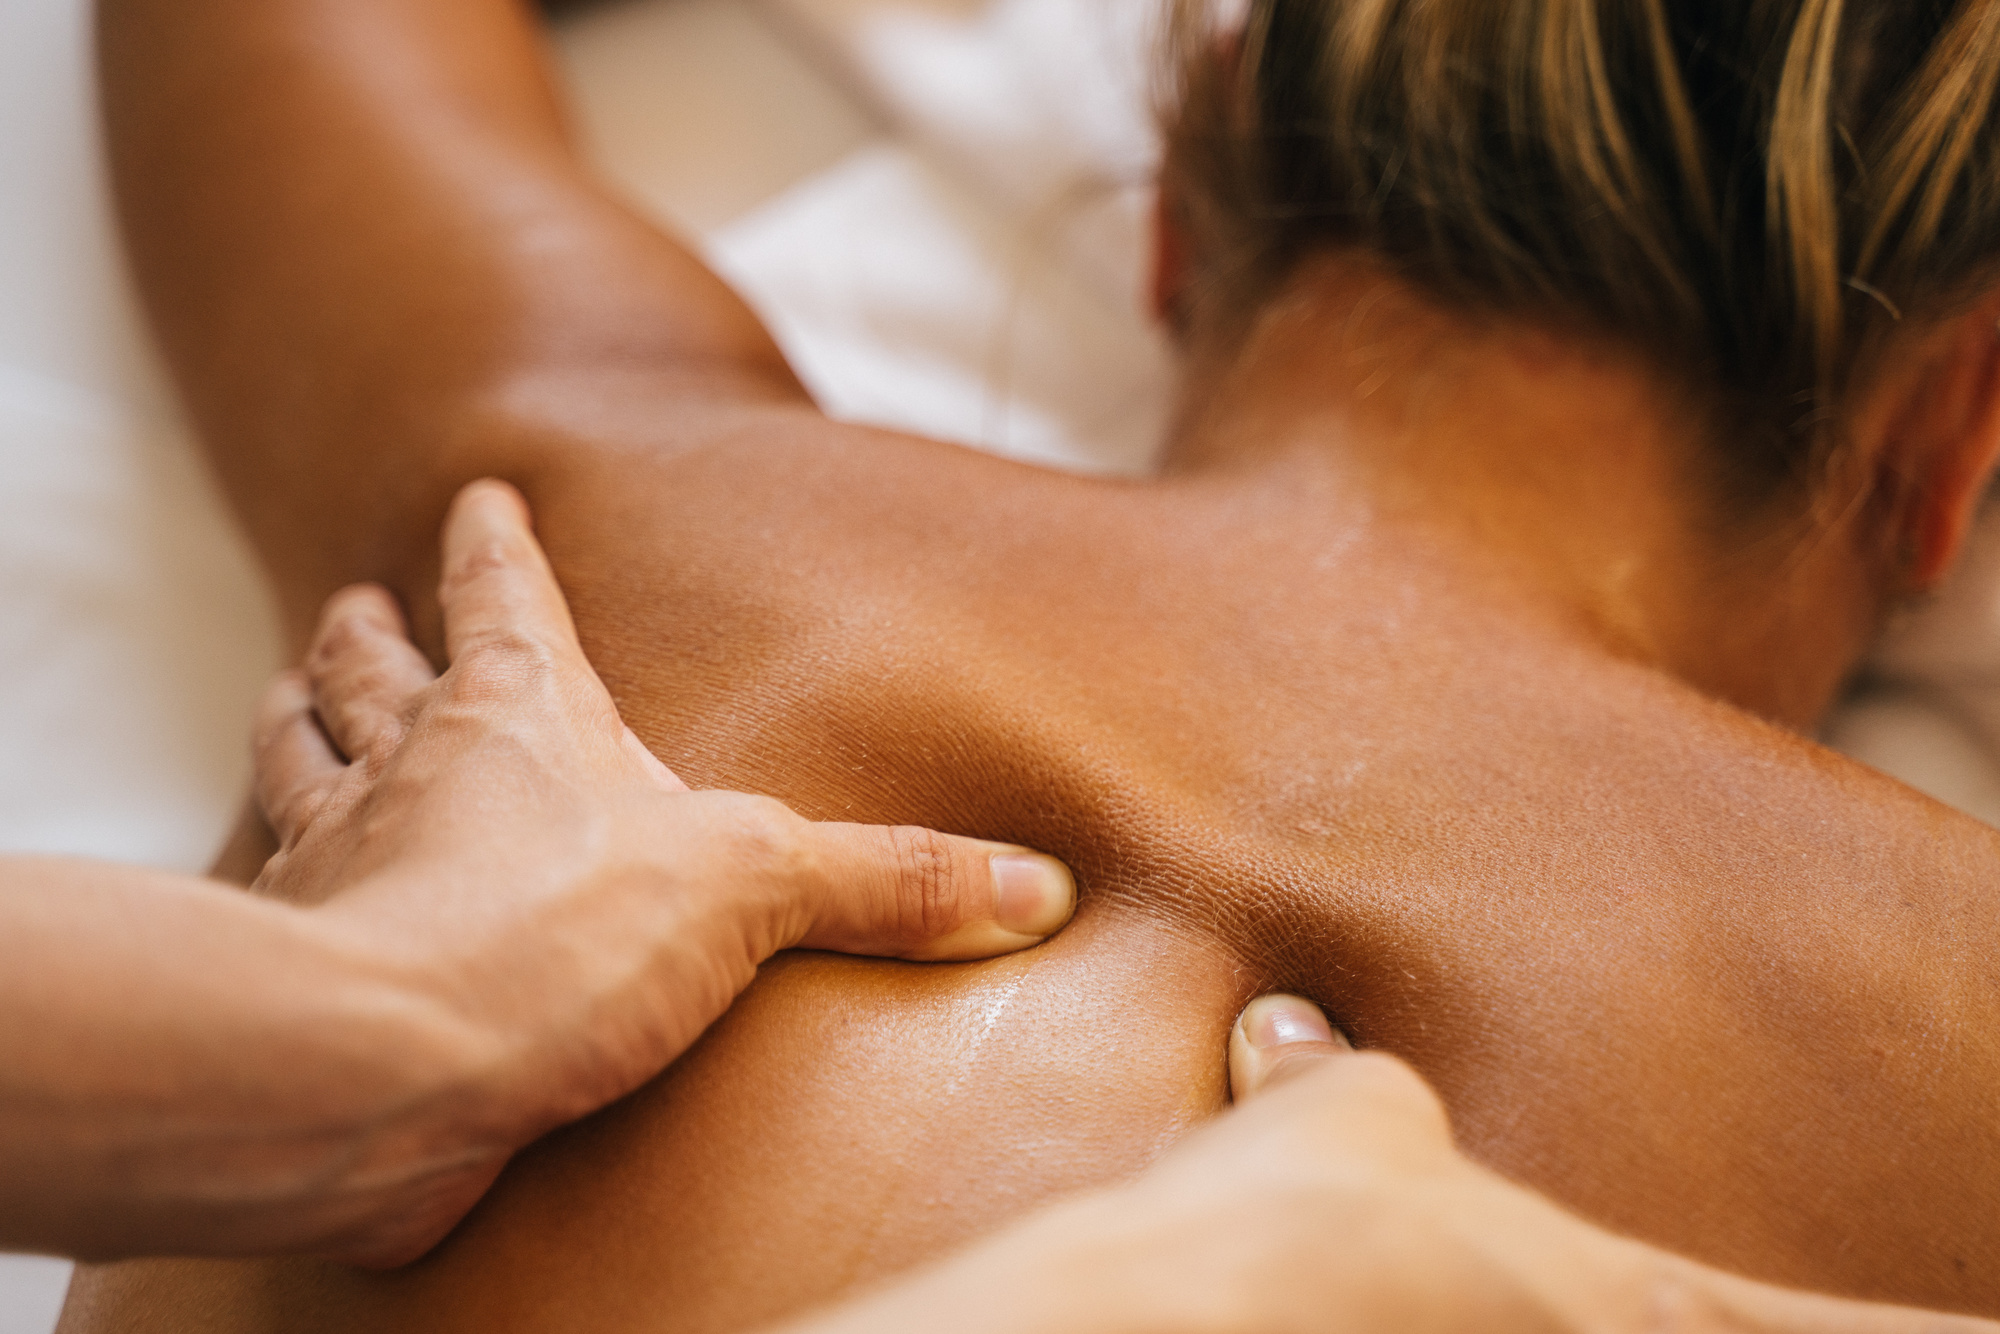 Topless Woman Having a Massage